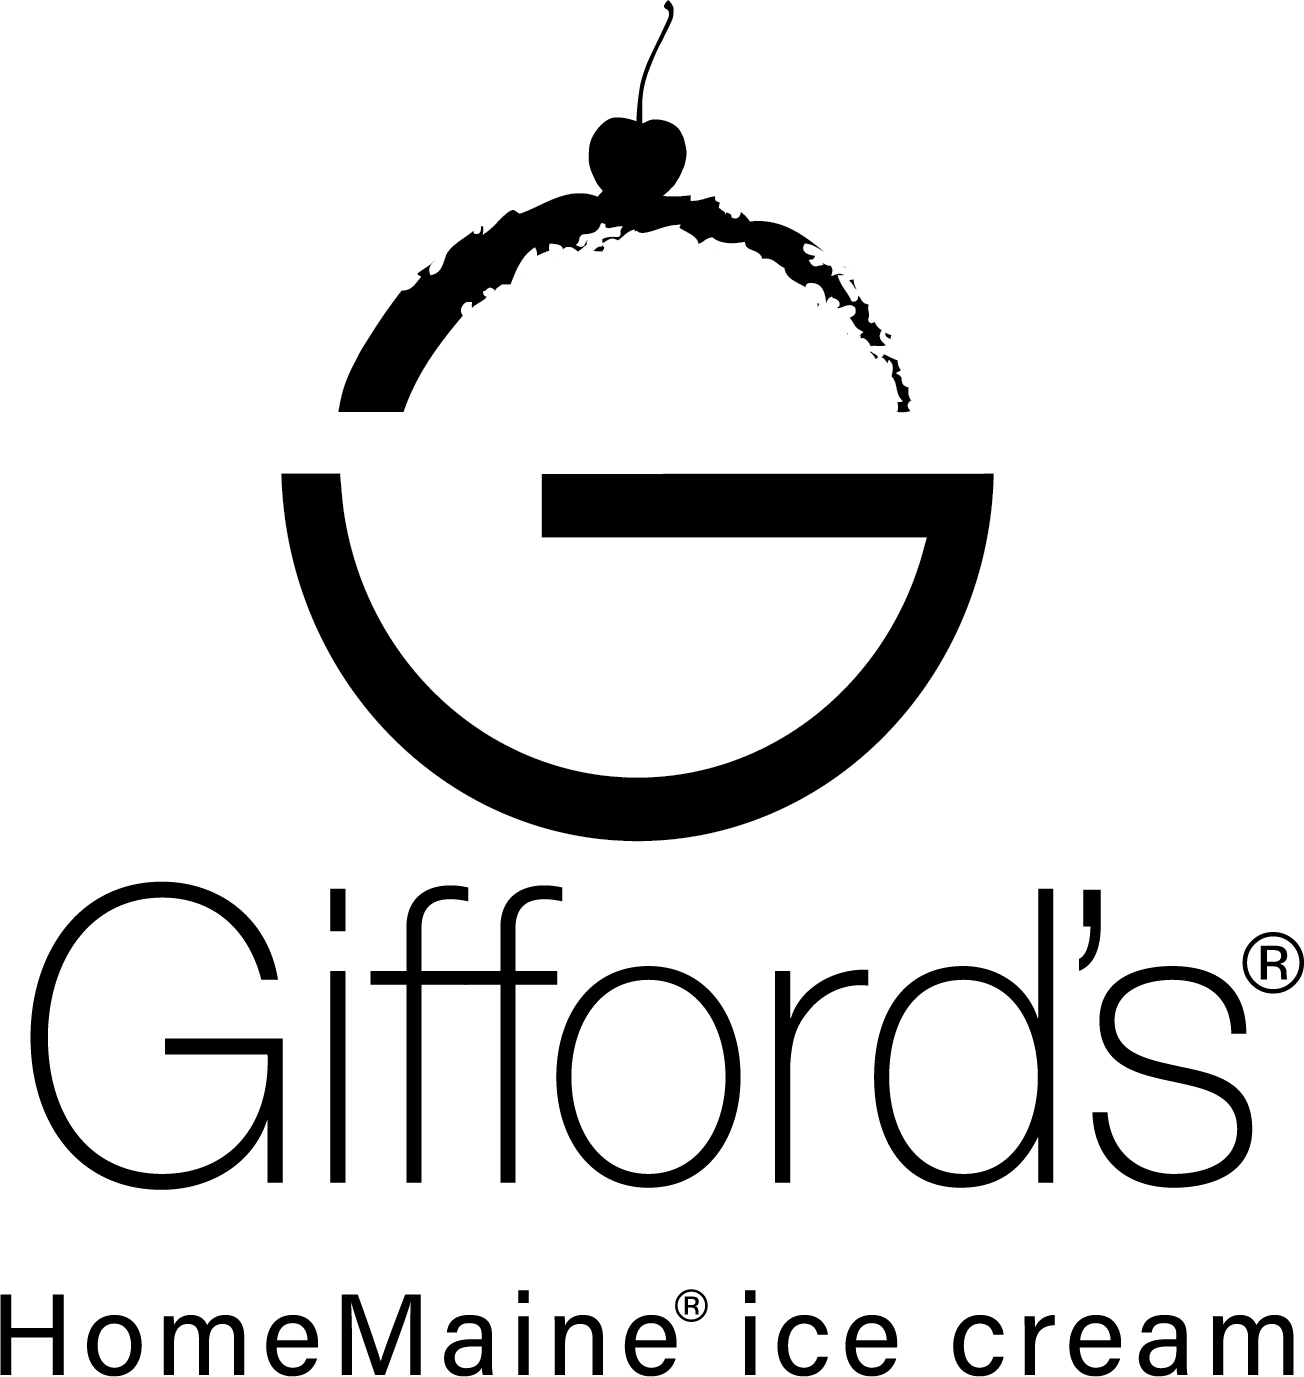 Gifford's logo